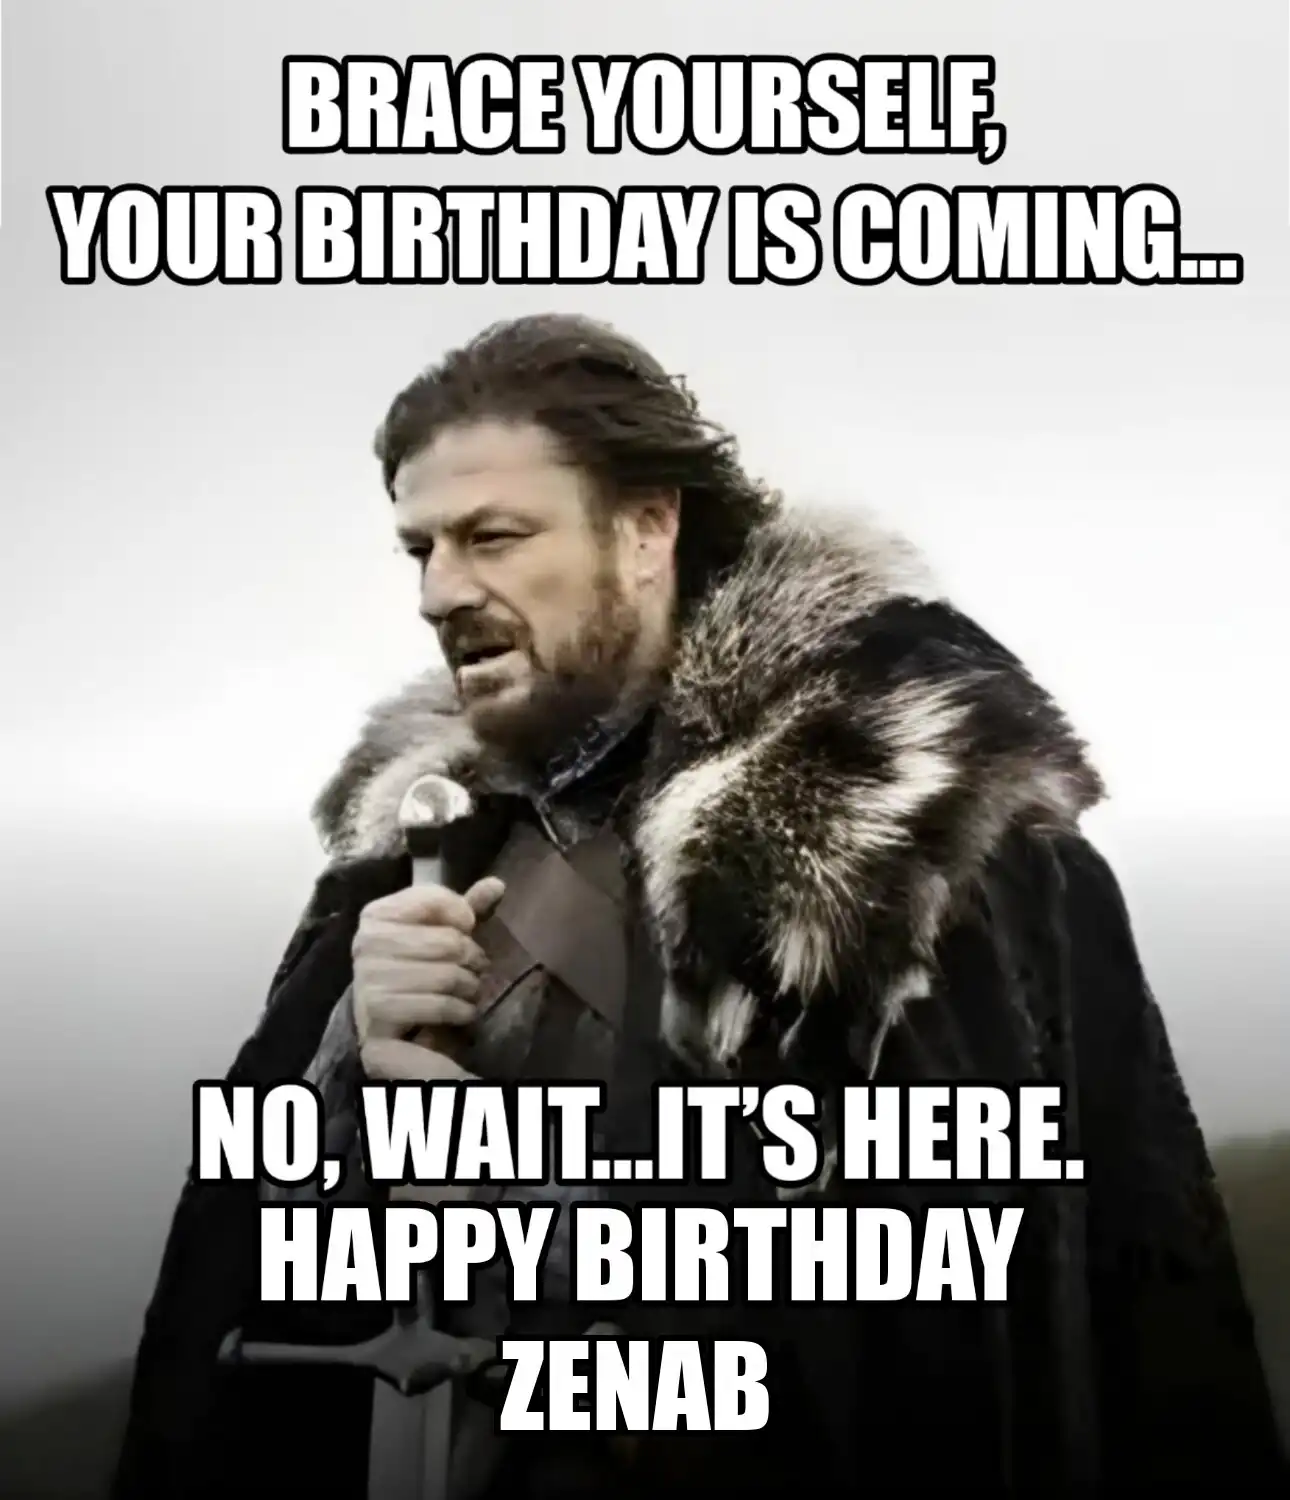 Happy Birthday Zenab Brace Yourself Your Birthday Is Coming Meme